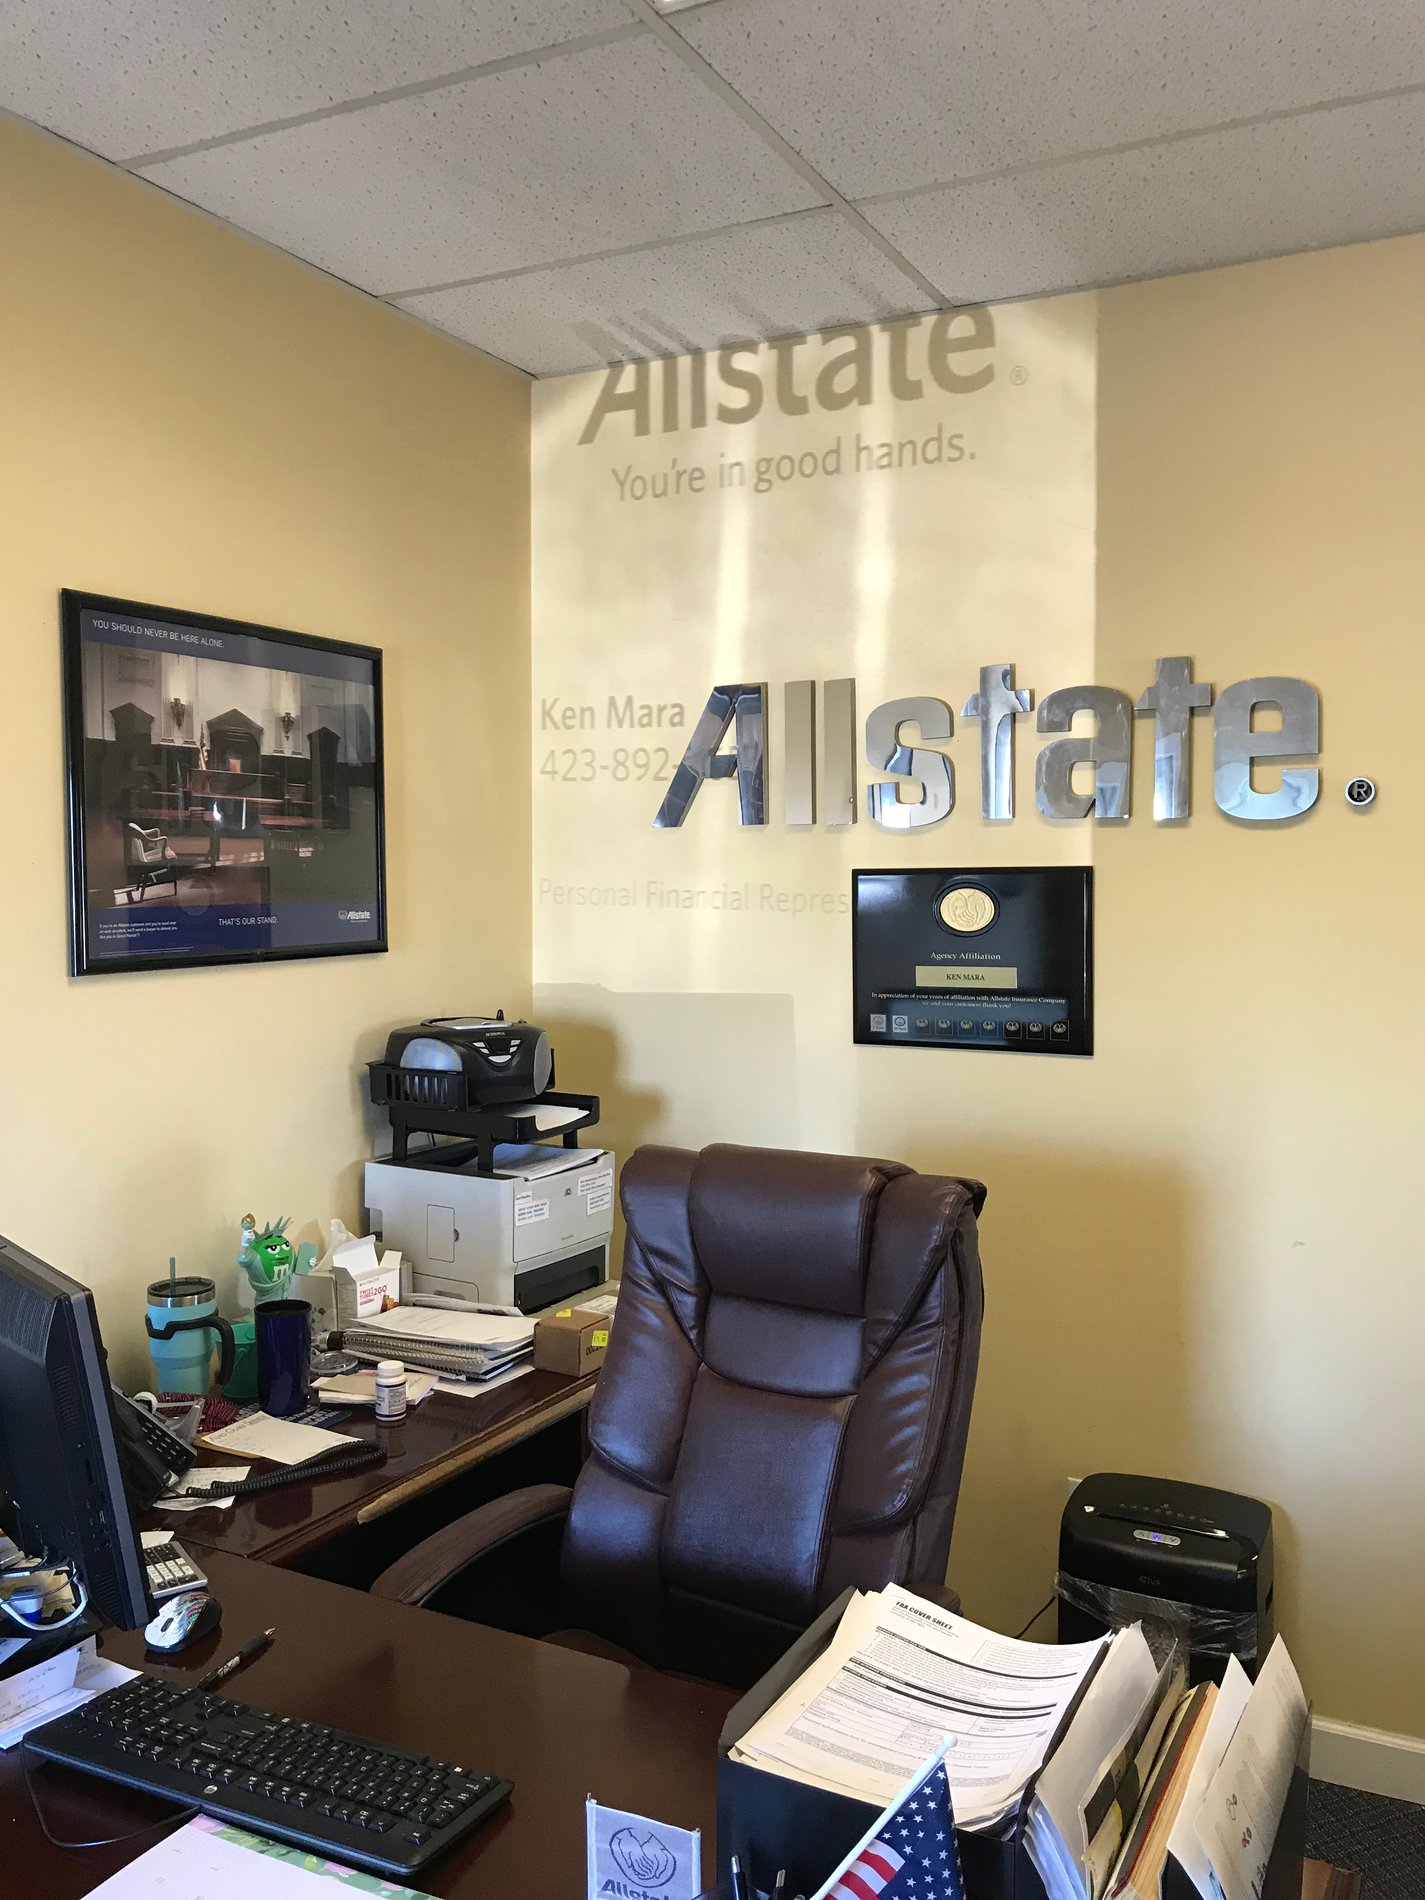 Allstate | Car Insurance in Chattanooga, TN - Ken Mara